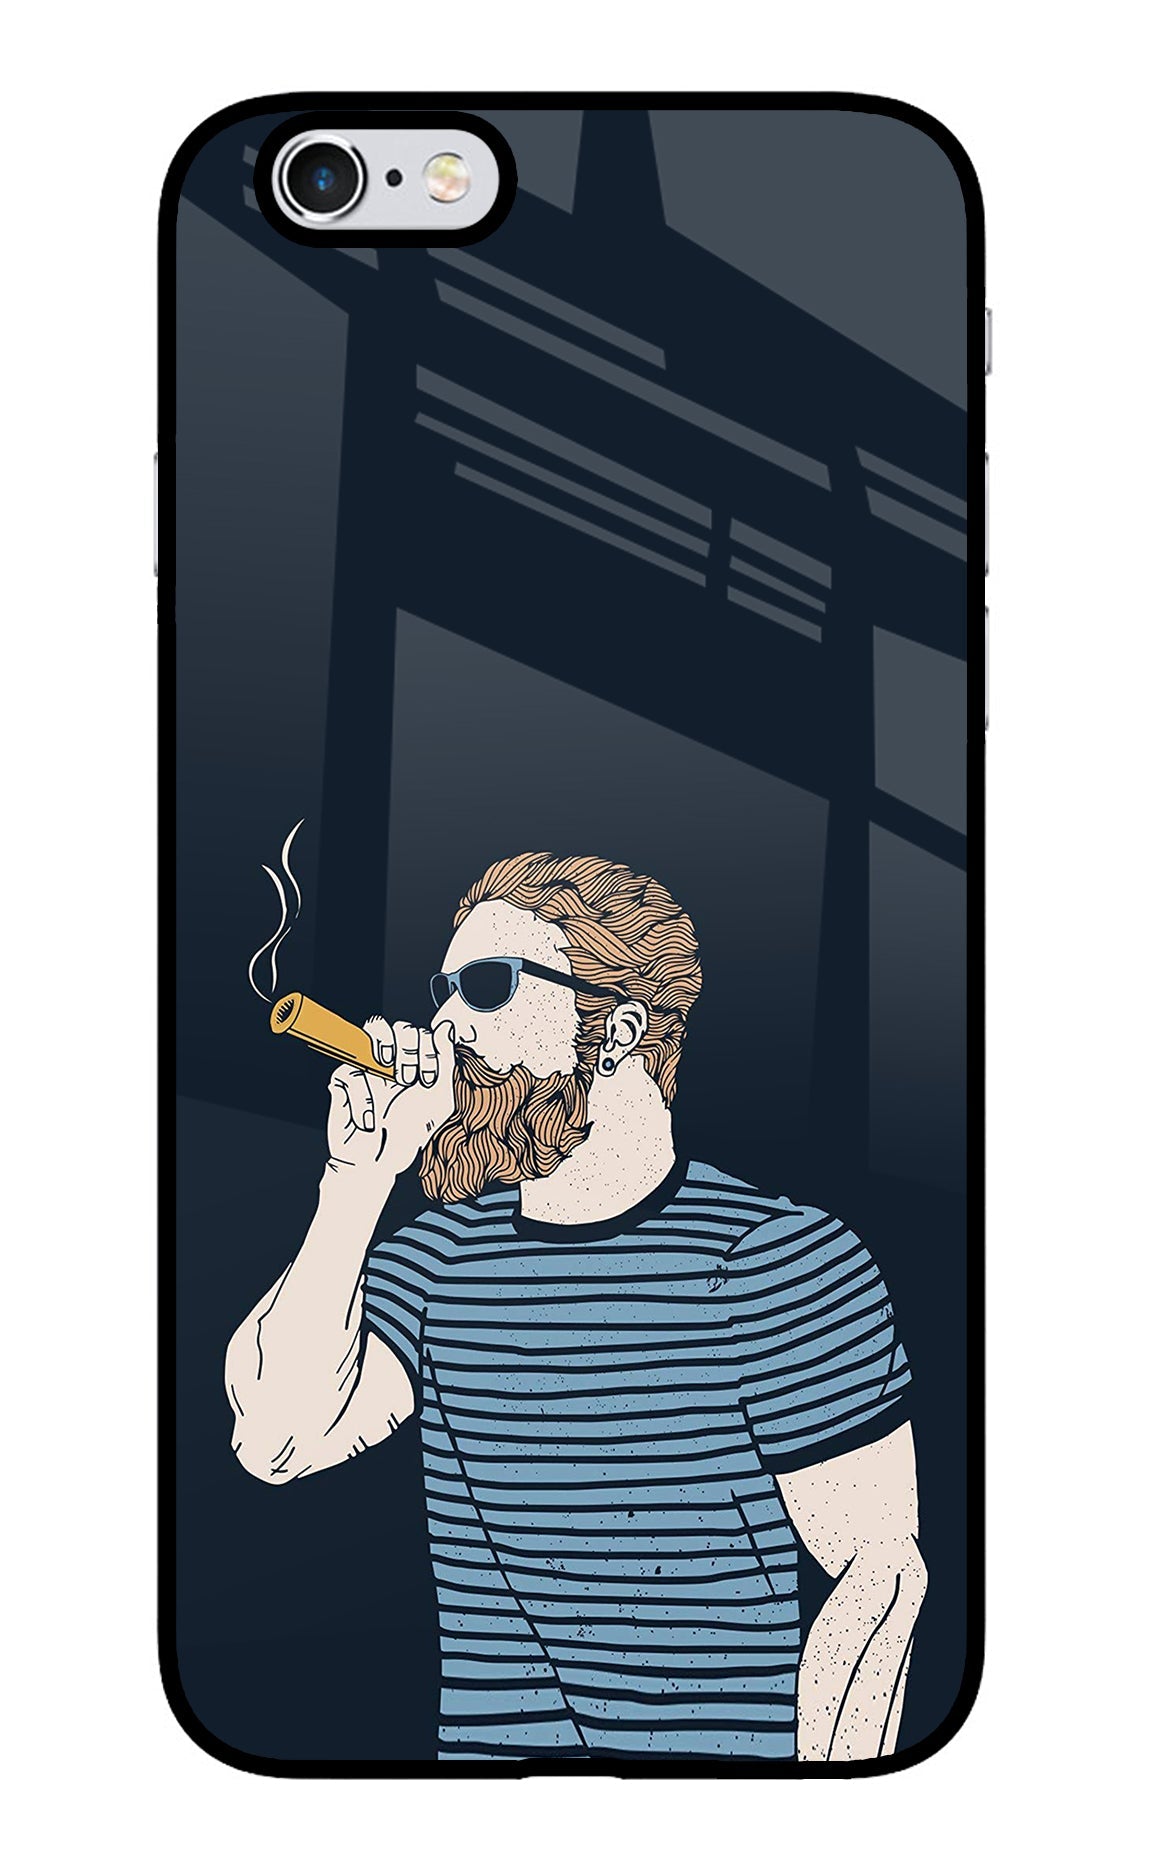 Smoking iPhone 6/6s Glass Case